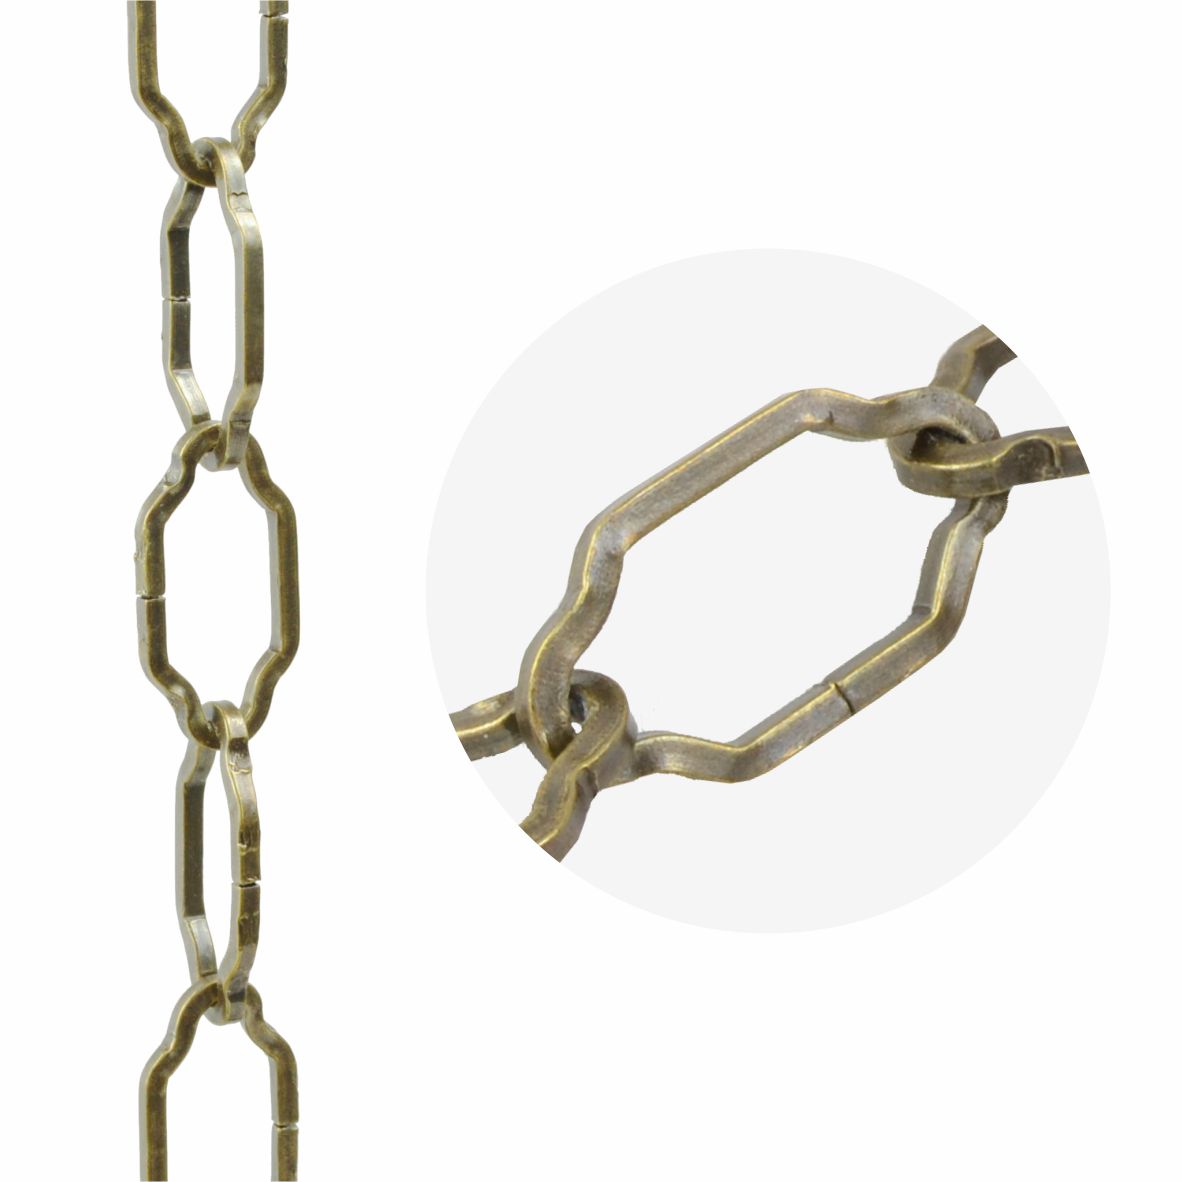 Antique Rustic Steel Decorative Gothic Chain